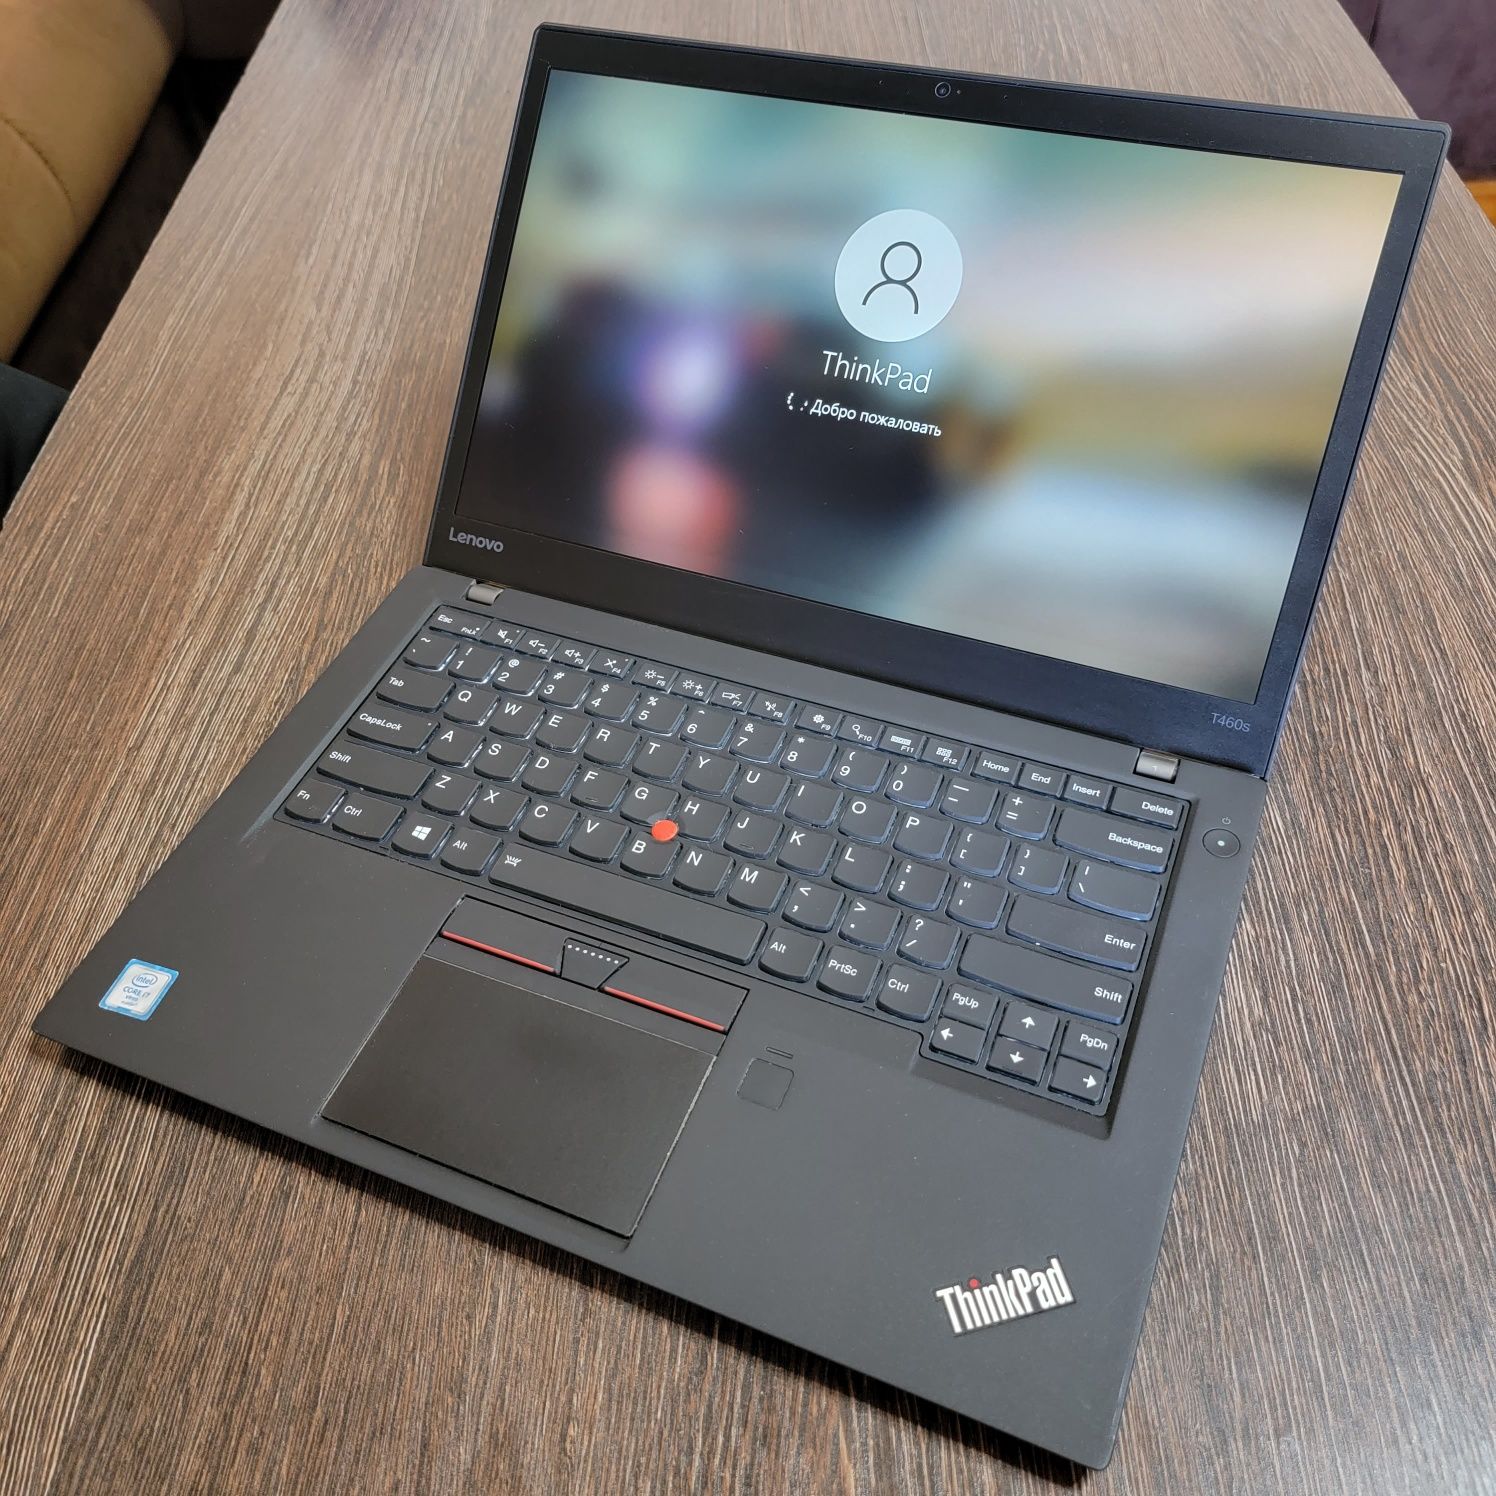 мощный i7 ультрабук Lenovo ThinkPad T460s, Американская сборка